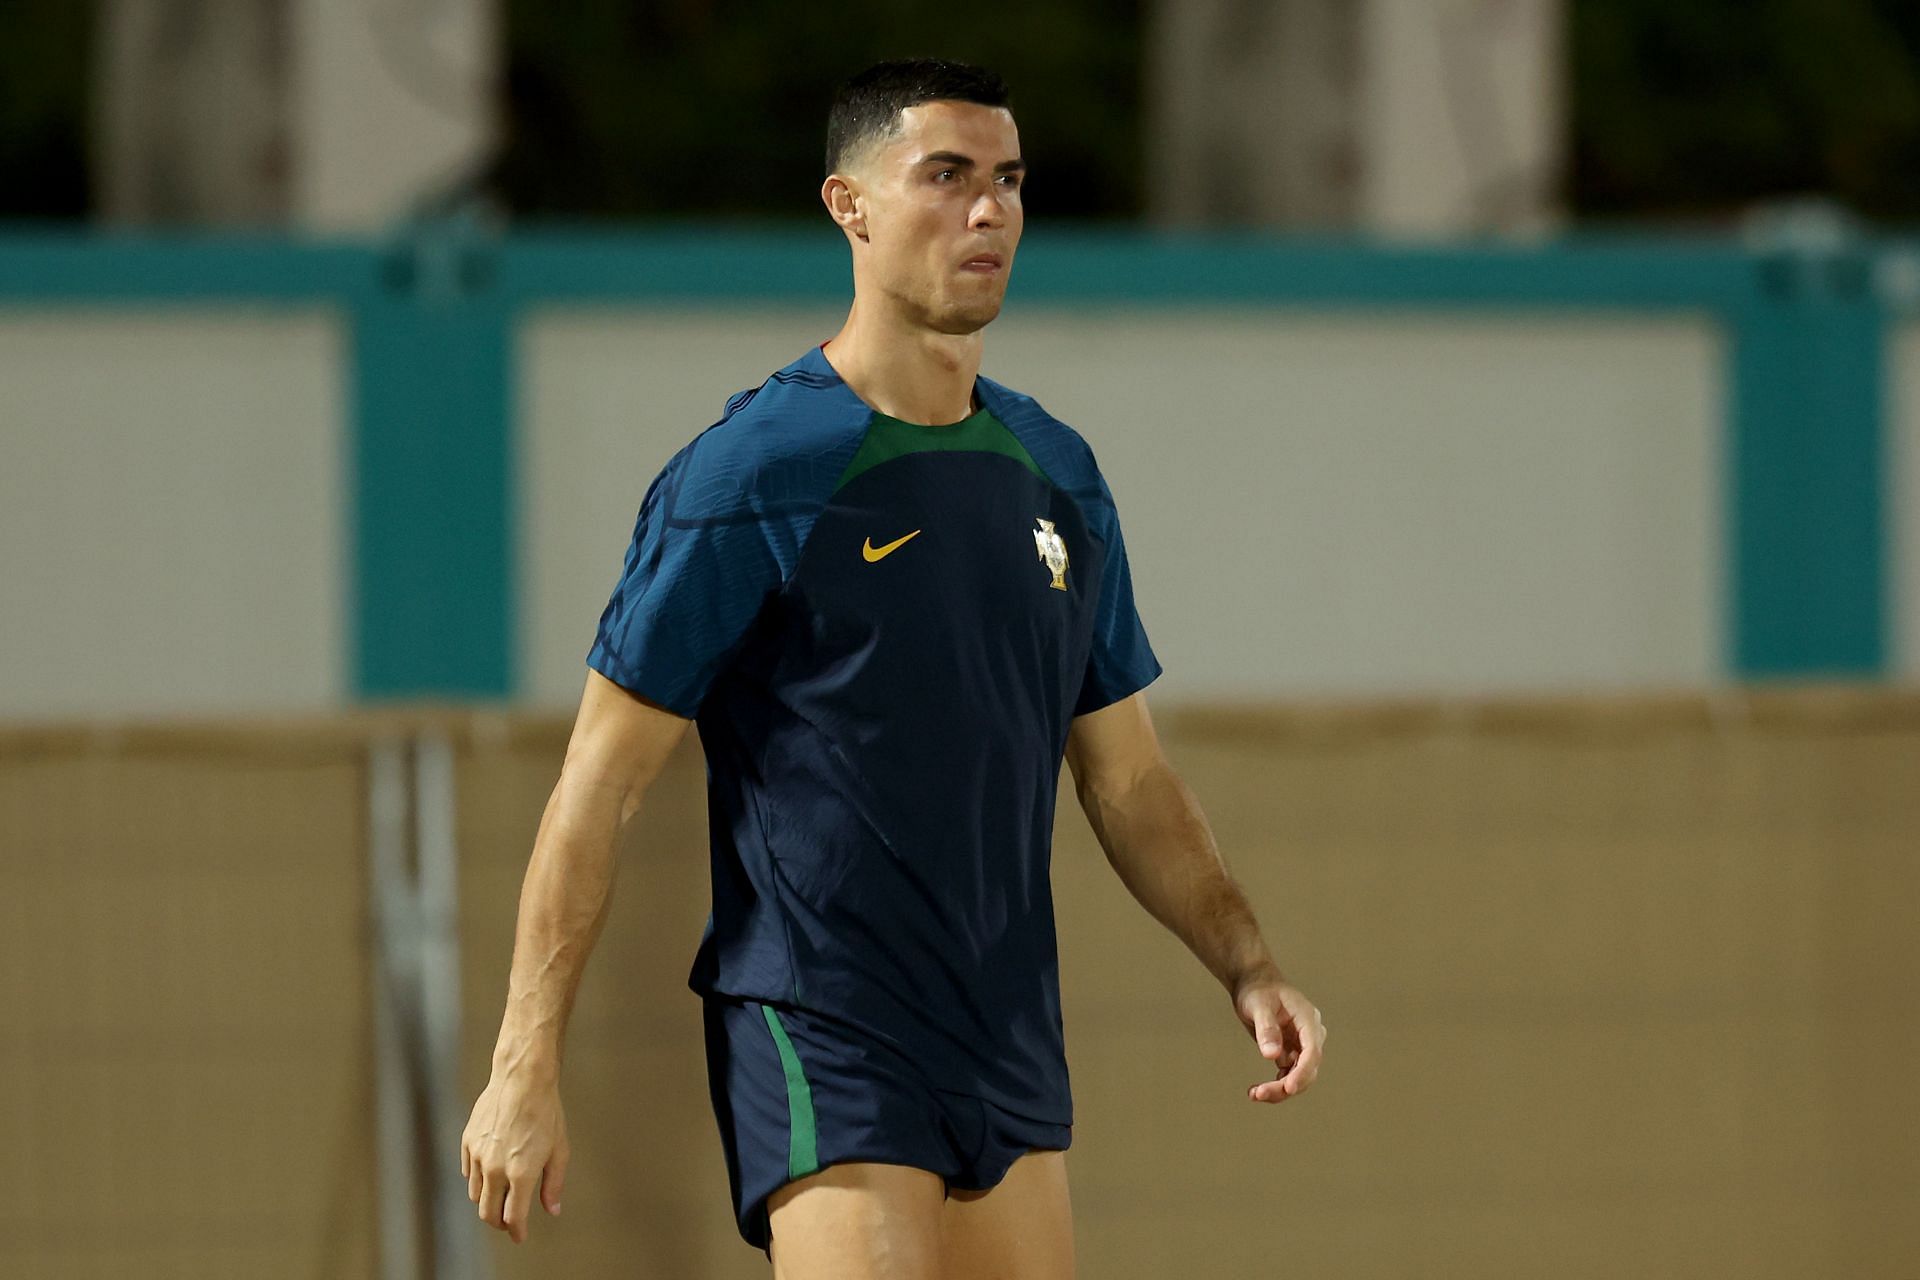 Portugal Training Session - FIFA World Cup Qatar 2022: Cristiano Ronaldo